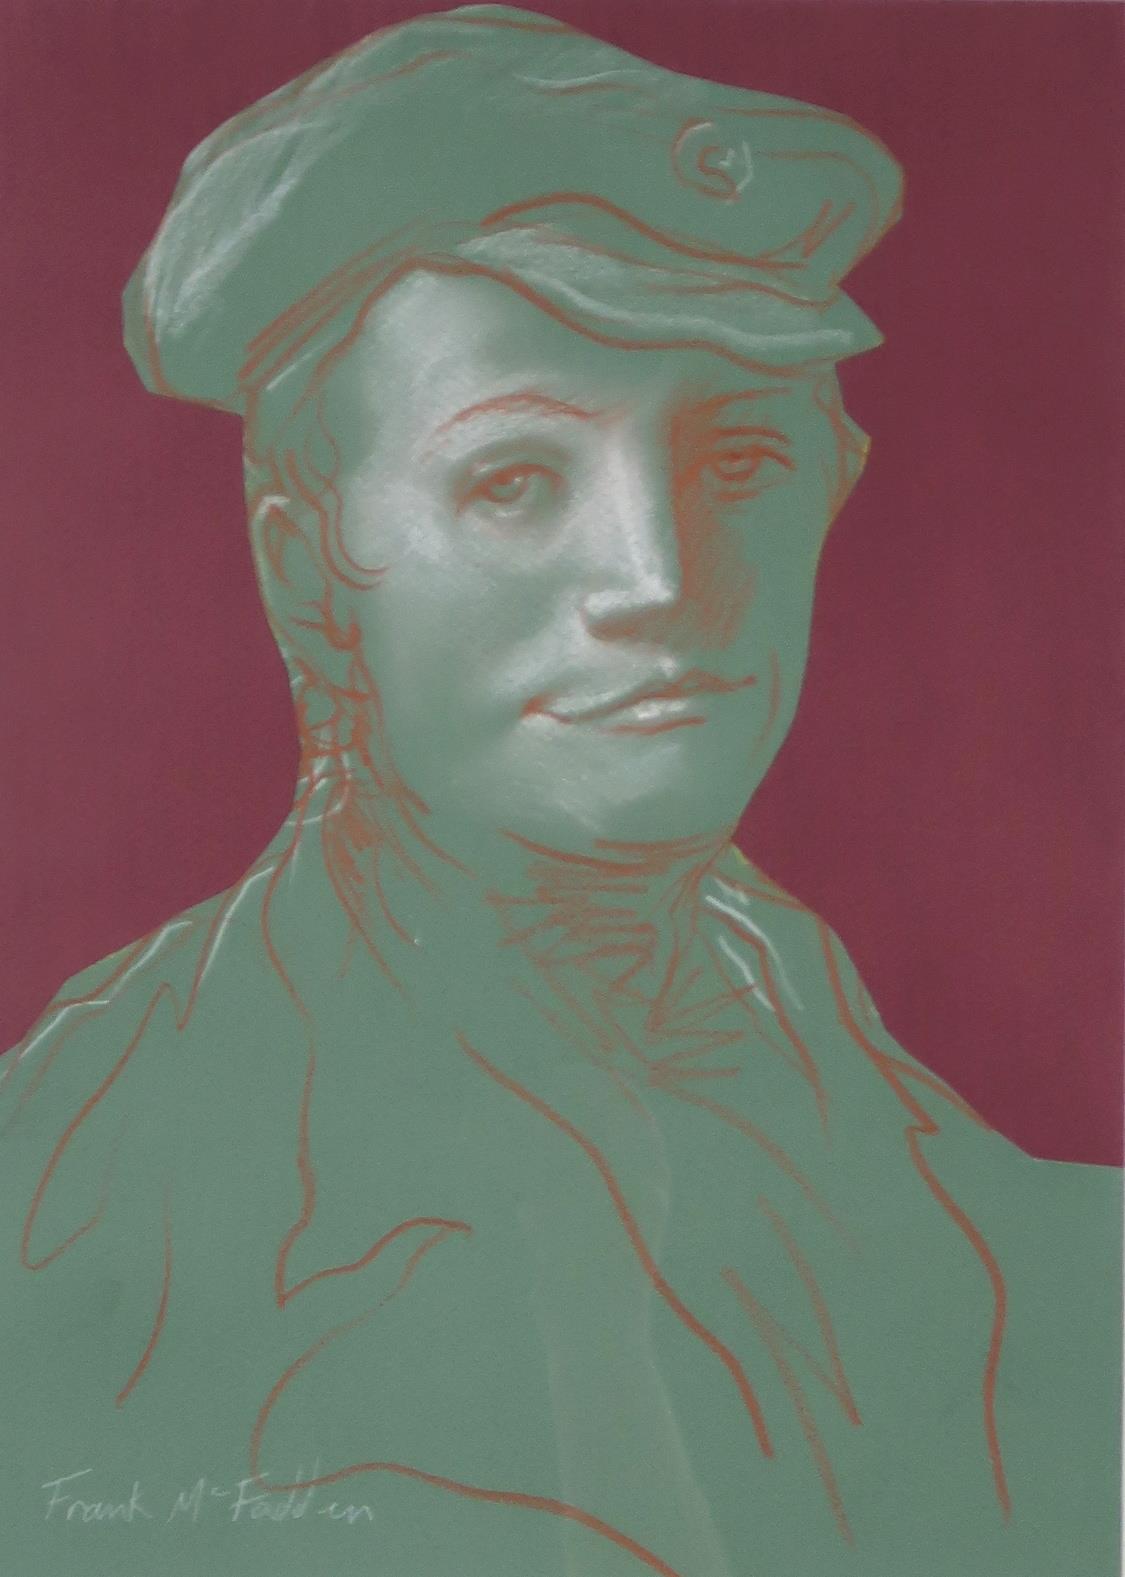 FRANK MCFADDEN (SCOTTISH b.1972) PORTRAIT OF A MAN Pastel/Collage on paper, signed lower left, 40